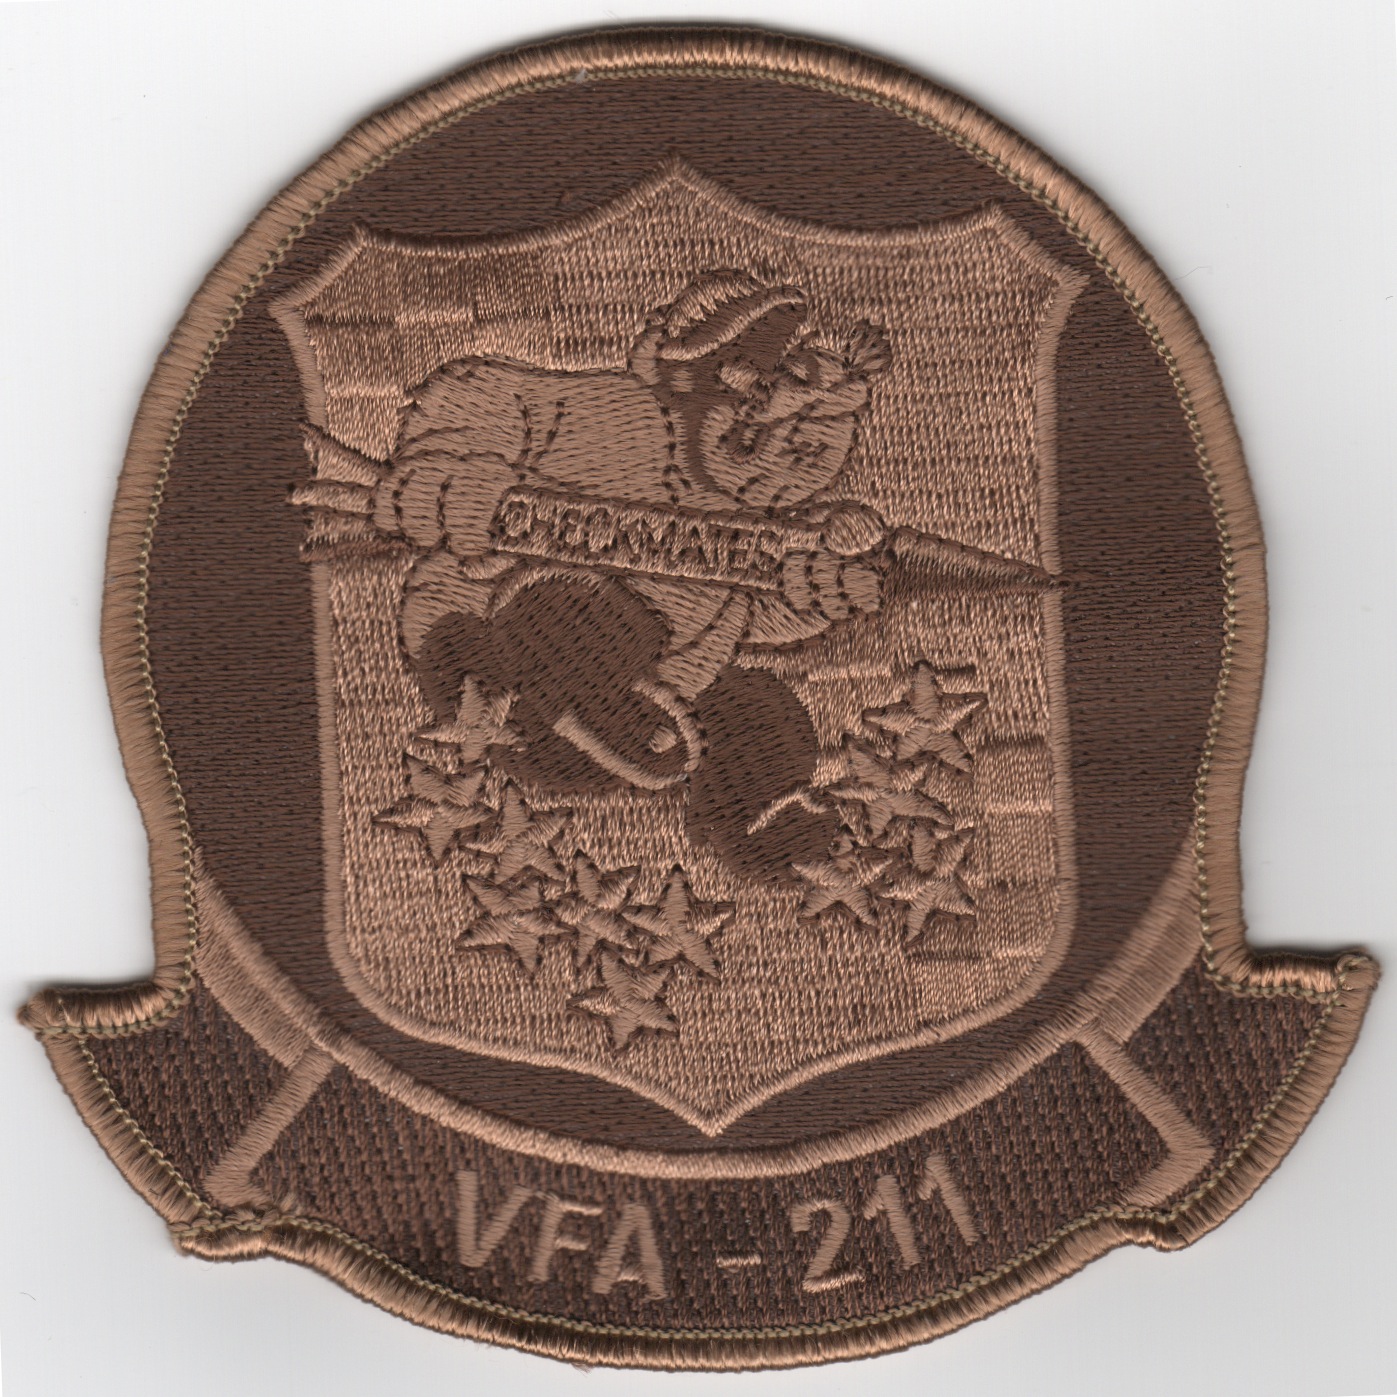 VFA-211 Squadron Patch (Desert)